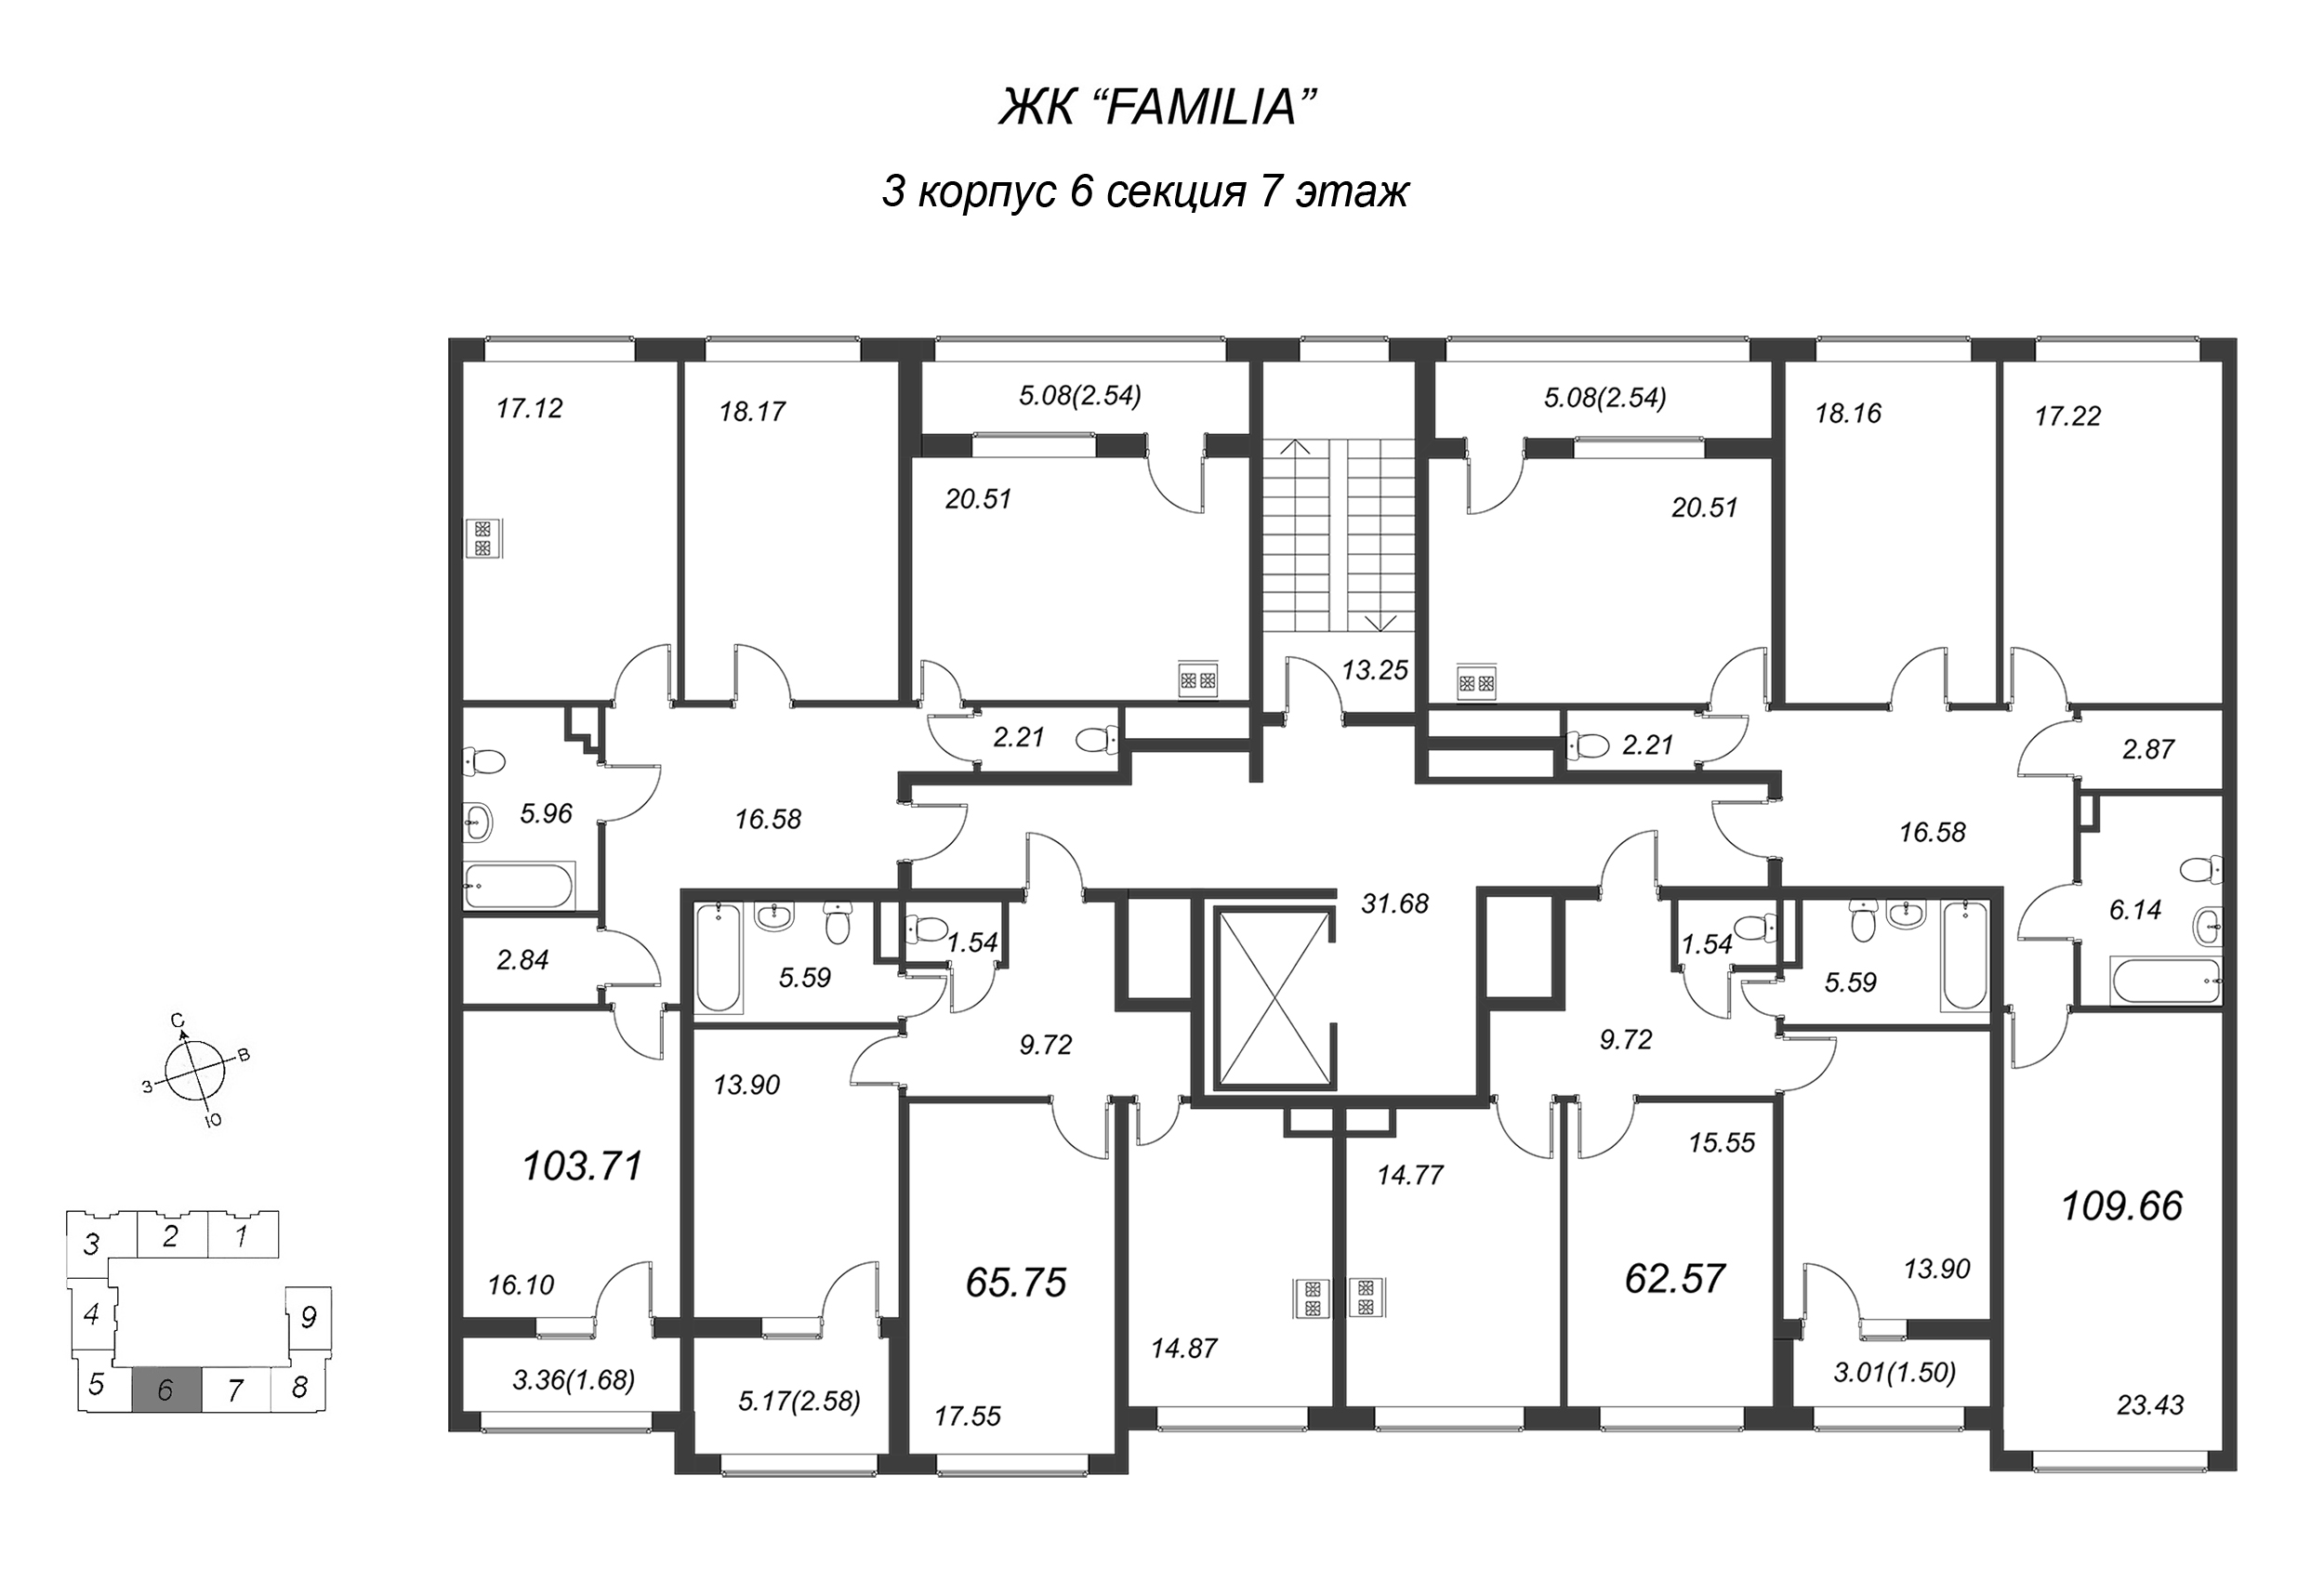 4-комнатная (Евро) квартира, 110.1 м² - планировка этажа